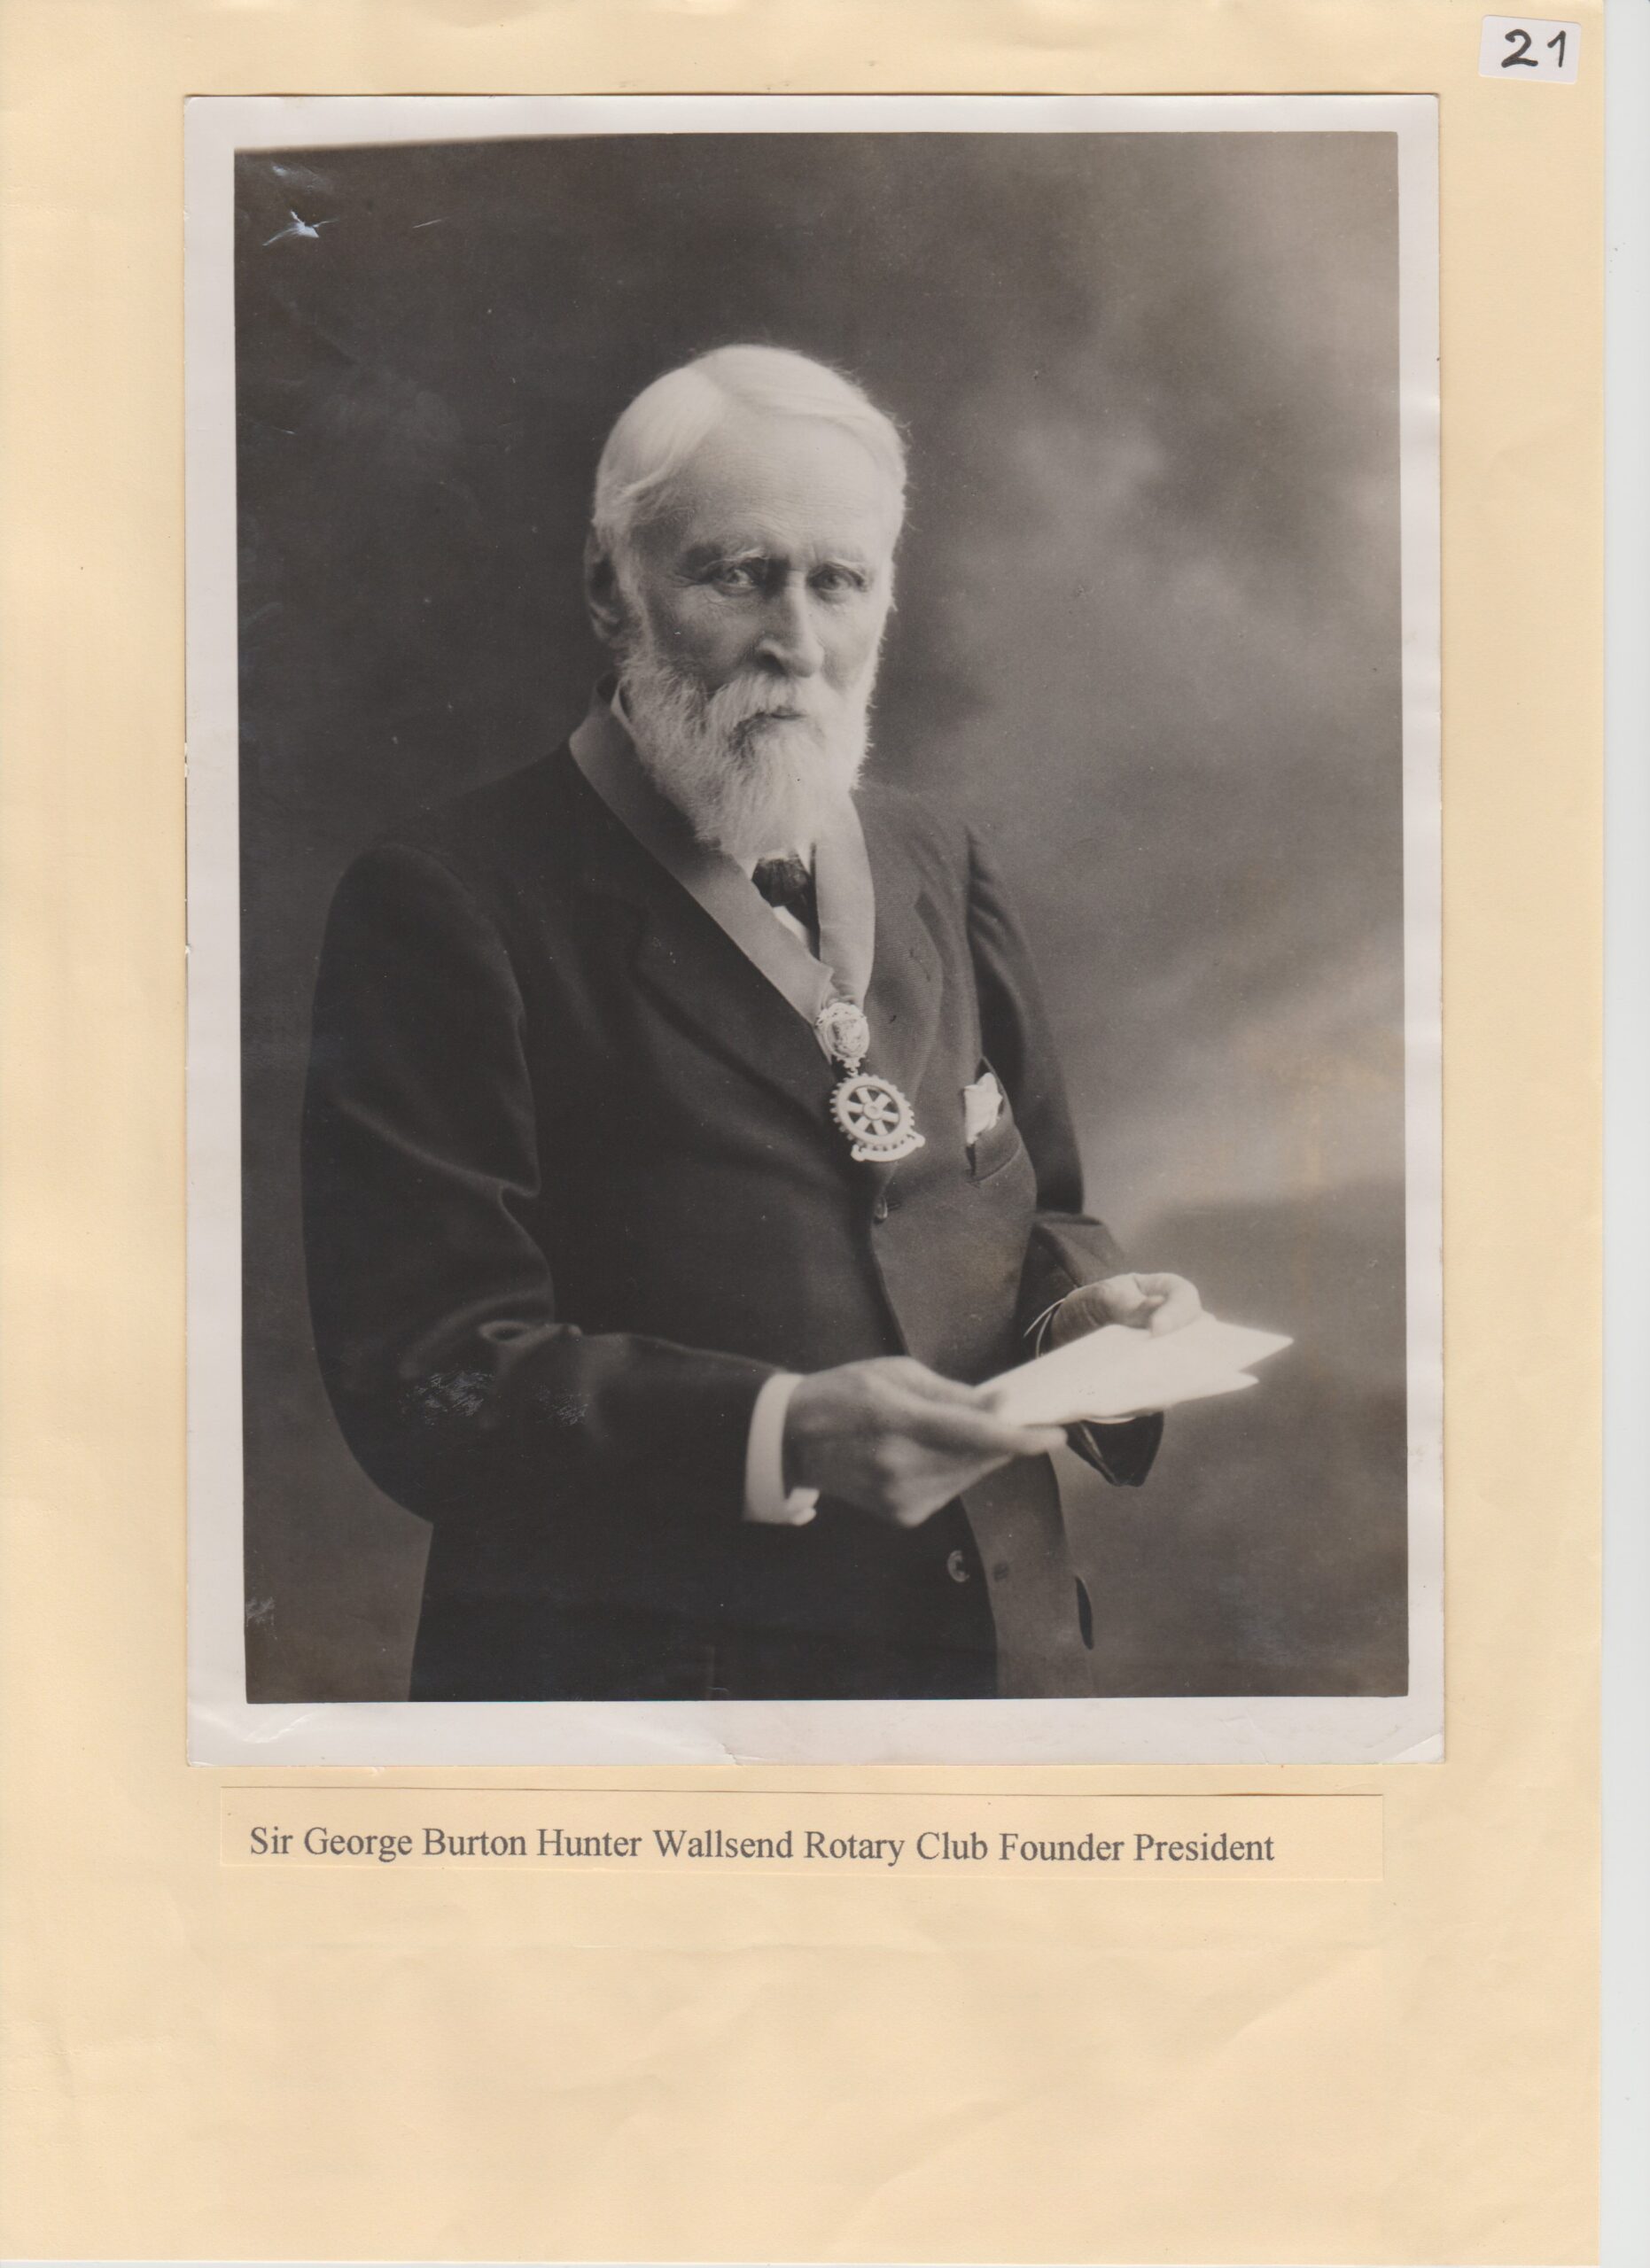 Sir Gearge Burton Hunter Wallsen Rotary Club Founder President